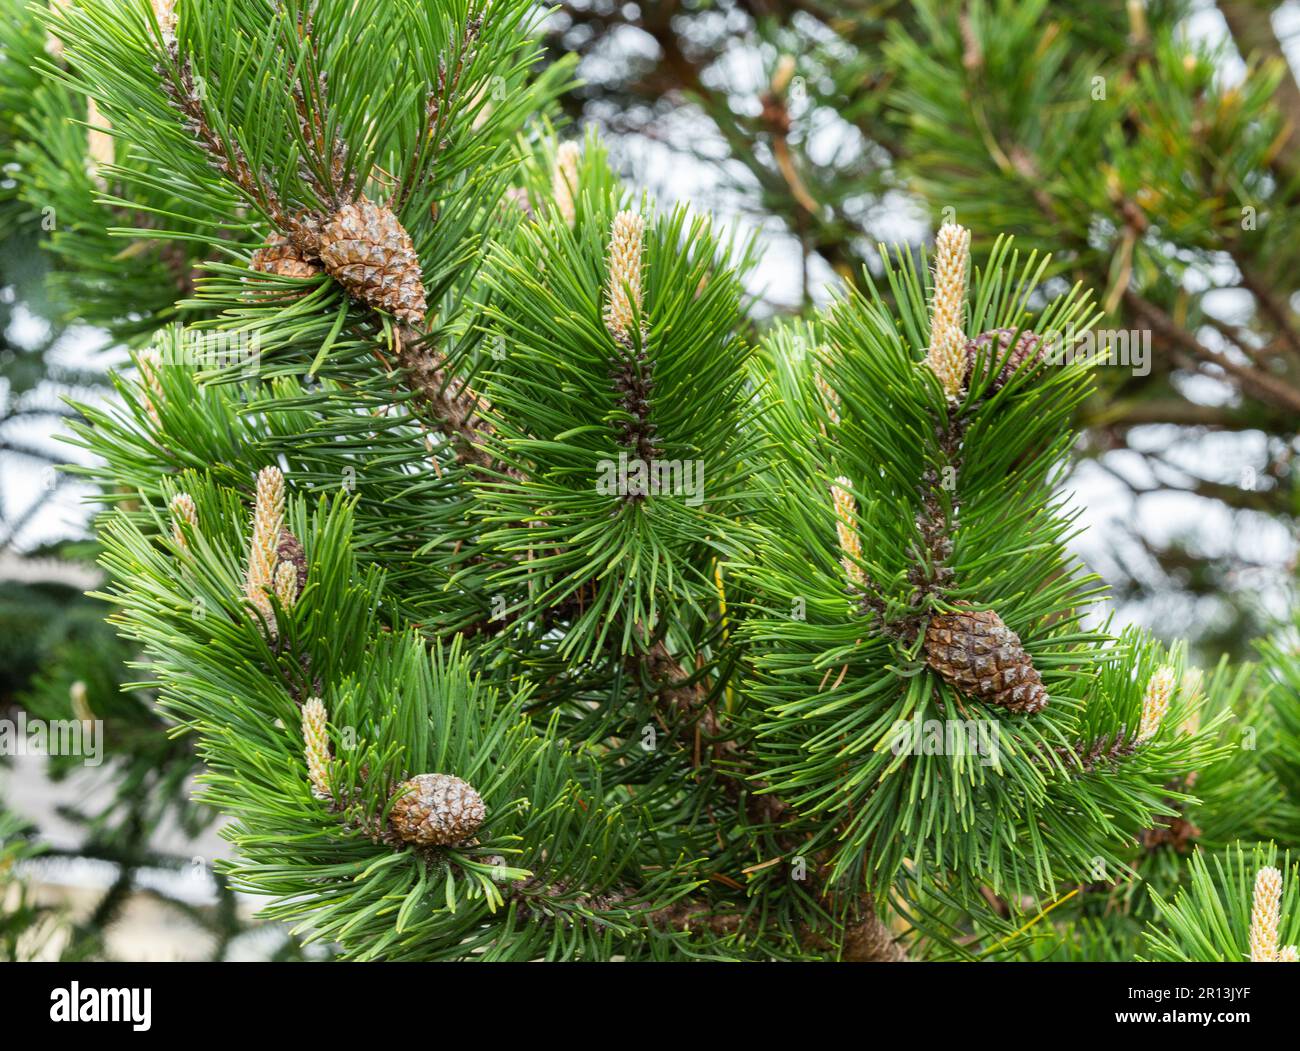 Dwarf Mountain Pine (Pinus mugo)  full of pine cones amongst the needles. Stock Photo